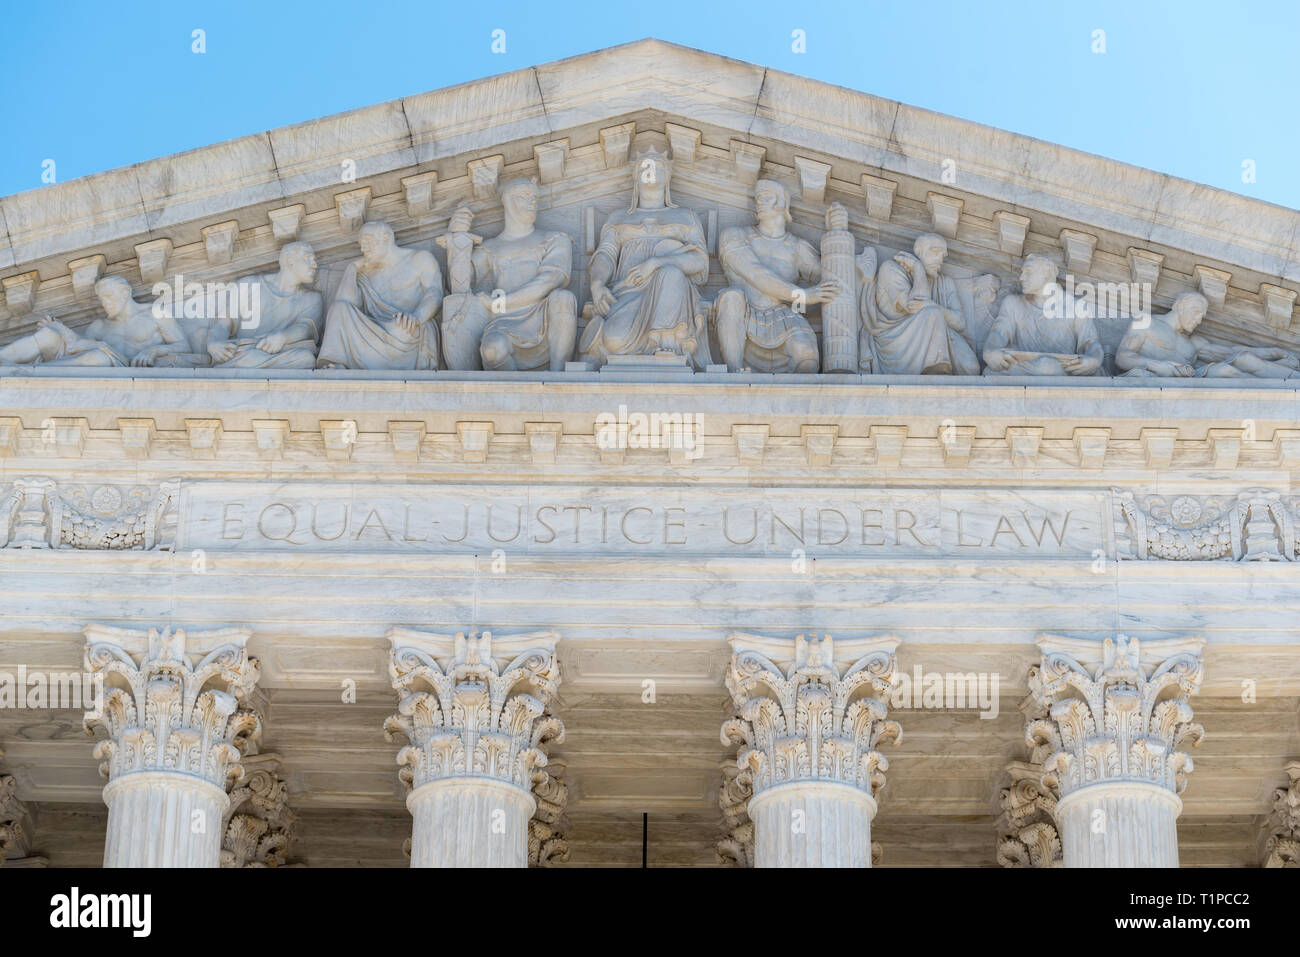 US Supreme Court in Washington, DC, USA Stockfoto